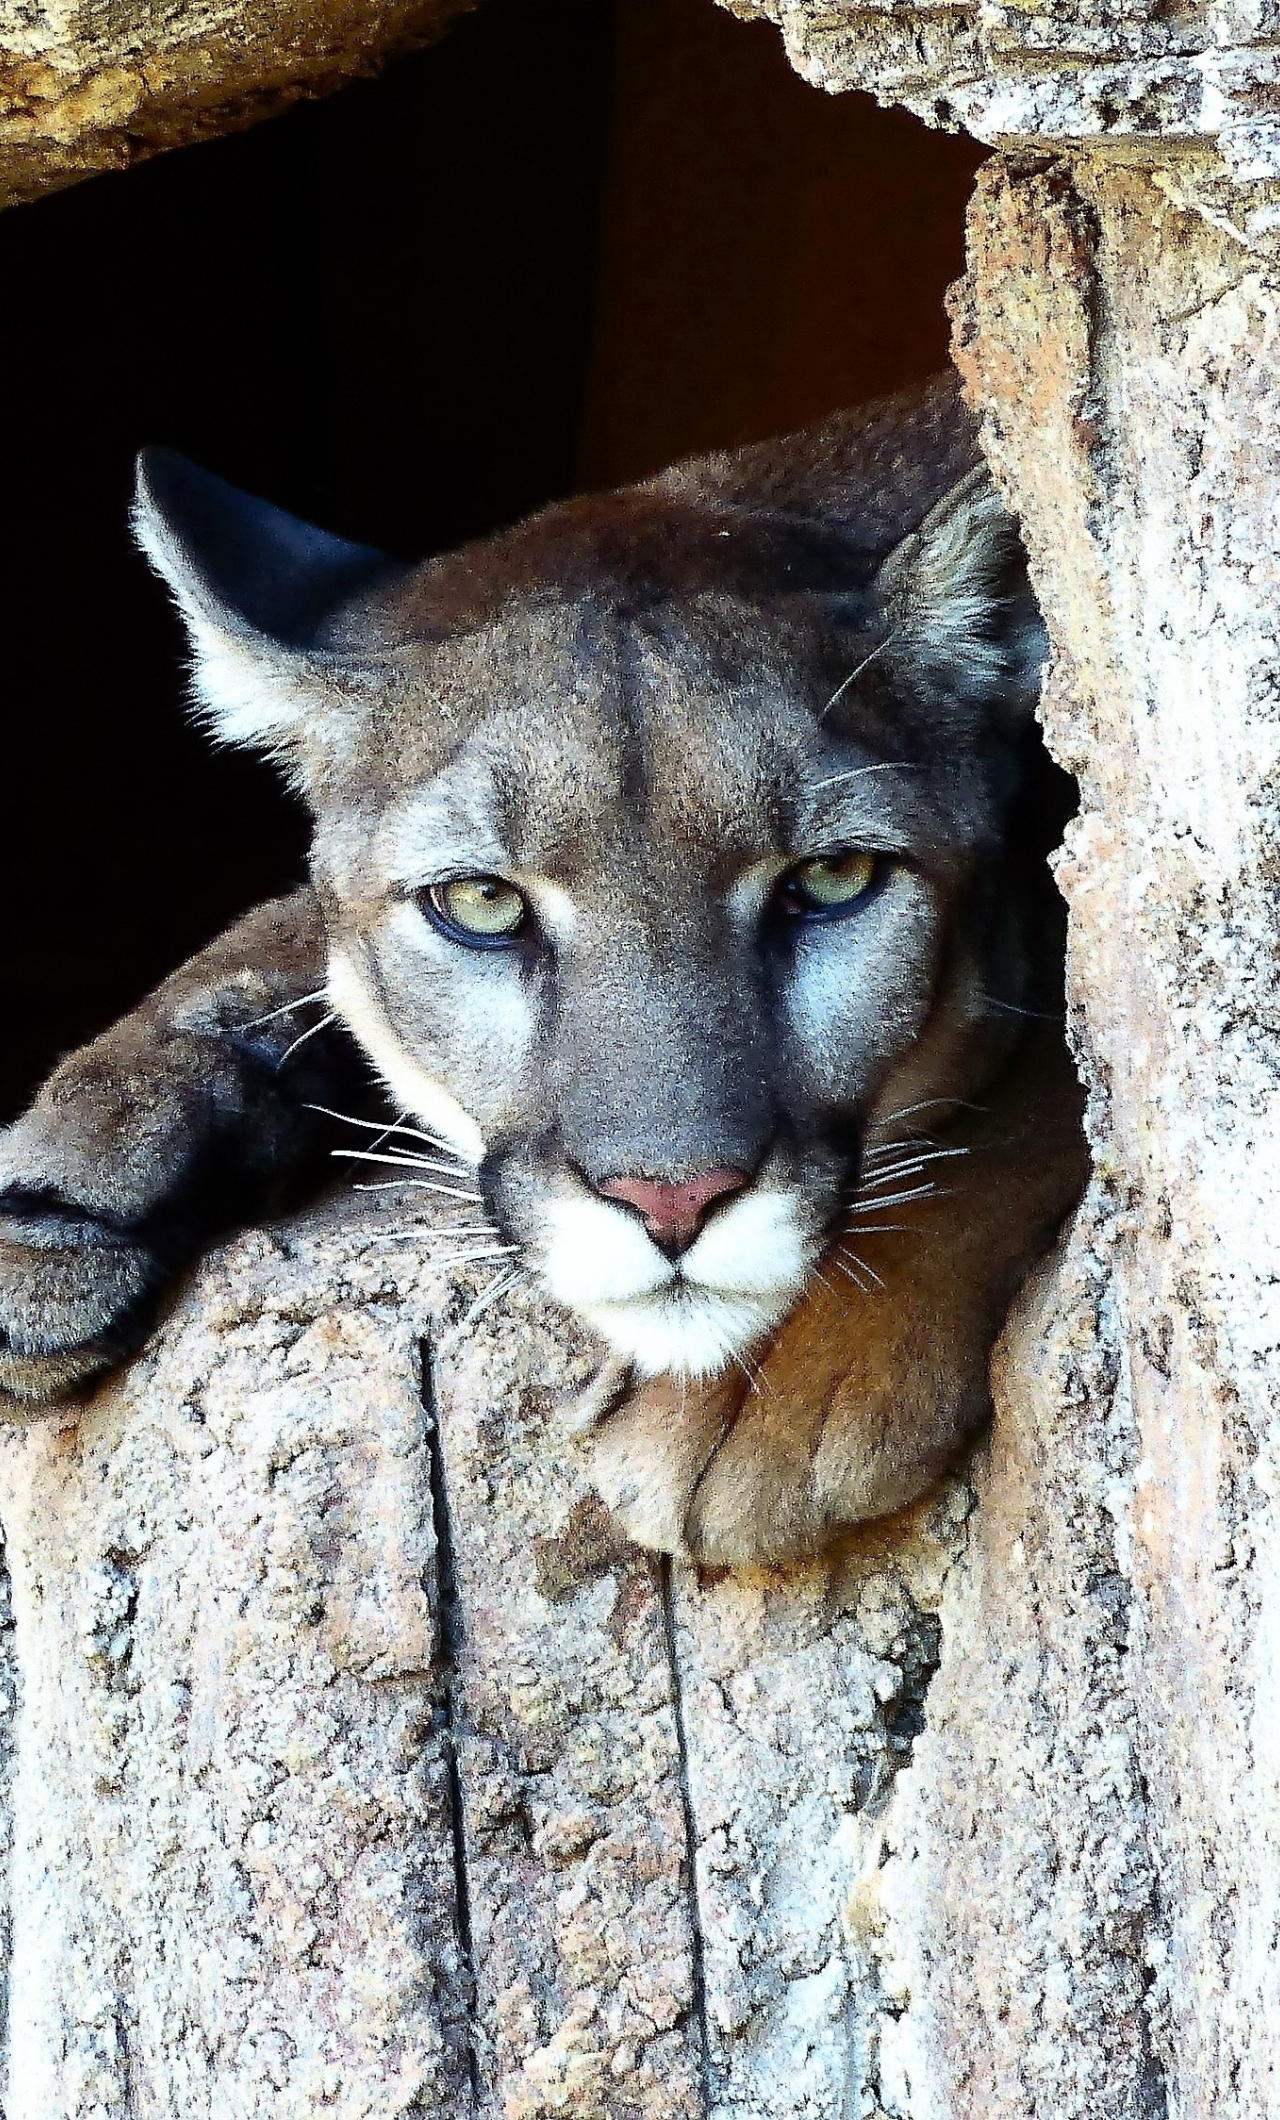 Download 1280x21 Wallpaper Puma Cougar Wild Cat Predator Stare Iphone 6 Plus 1280x21 Hd Image Background 9597